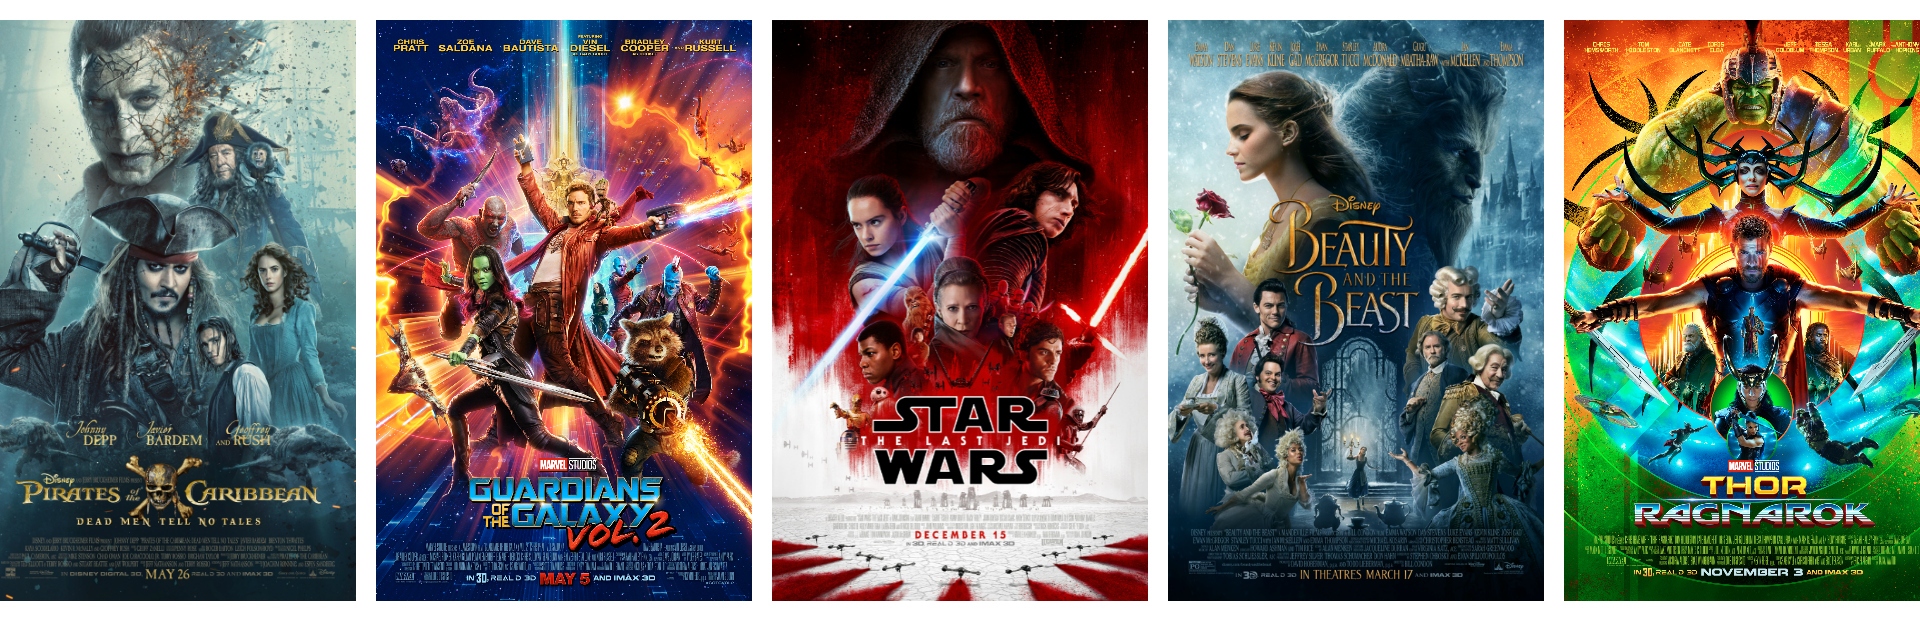 Top 5 Disney Company Films Of 2017 Top 5 Predictions Of 2018